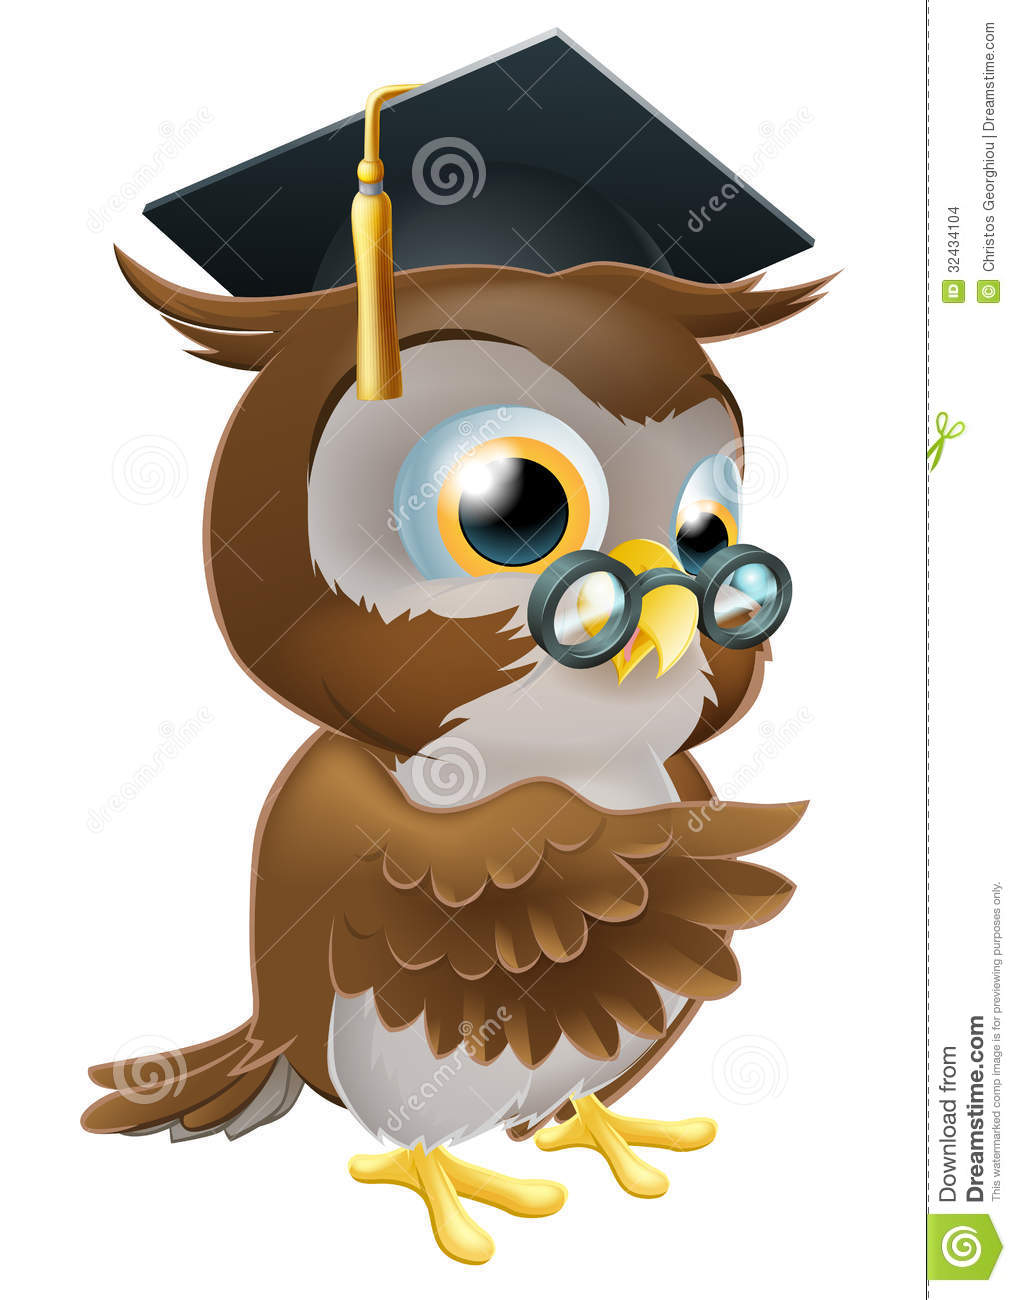 An Illustration Of A Smart Owl Wearing A Mortar Board Graduation Cap